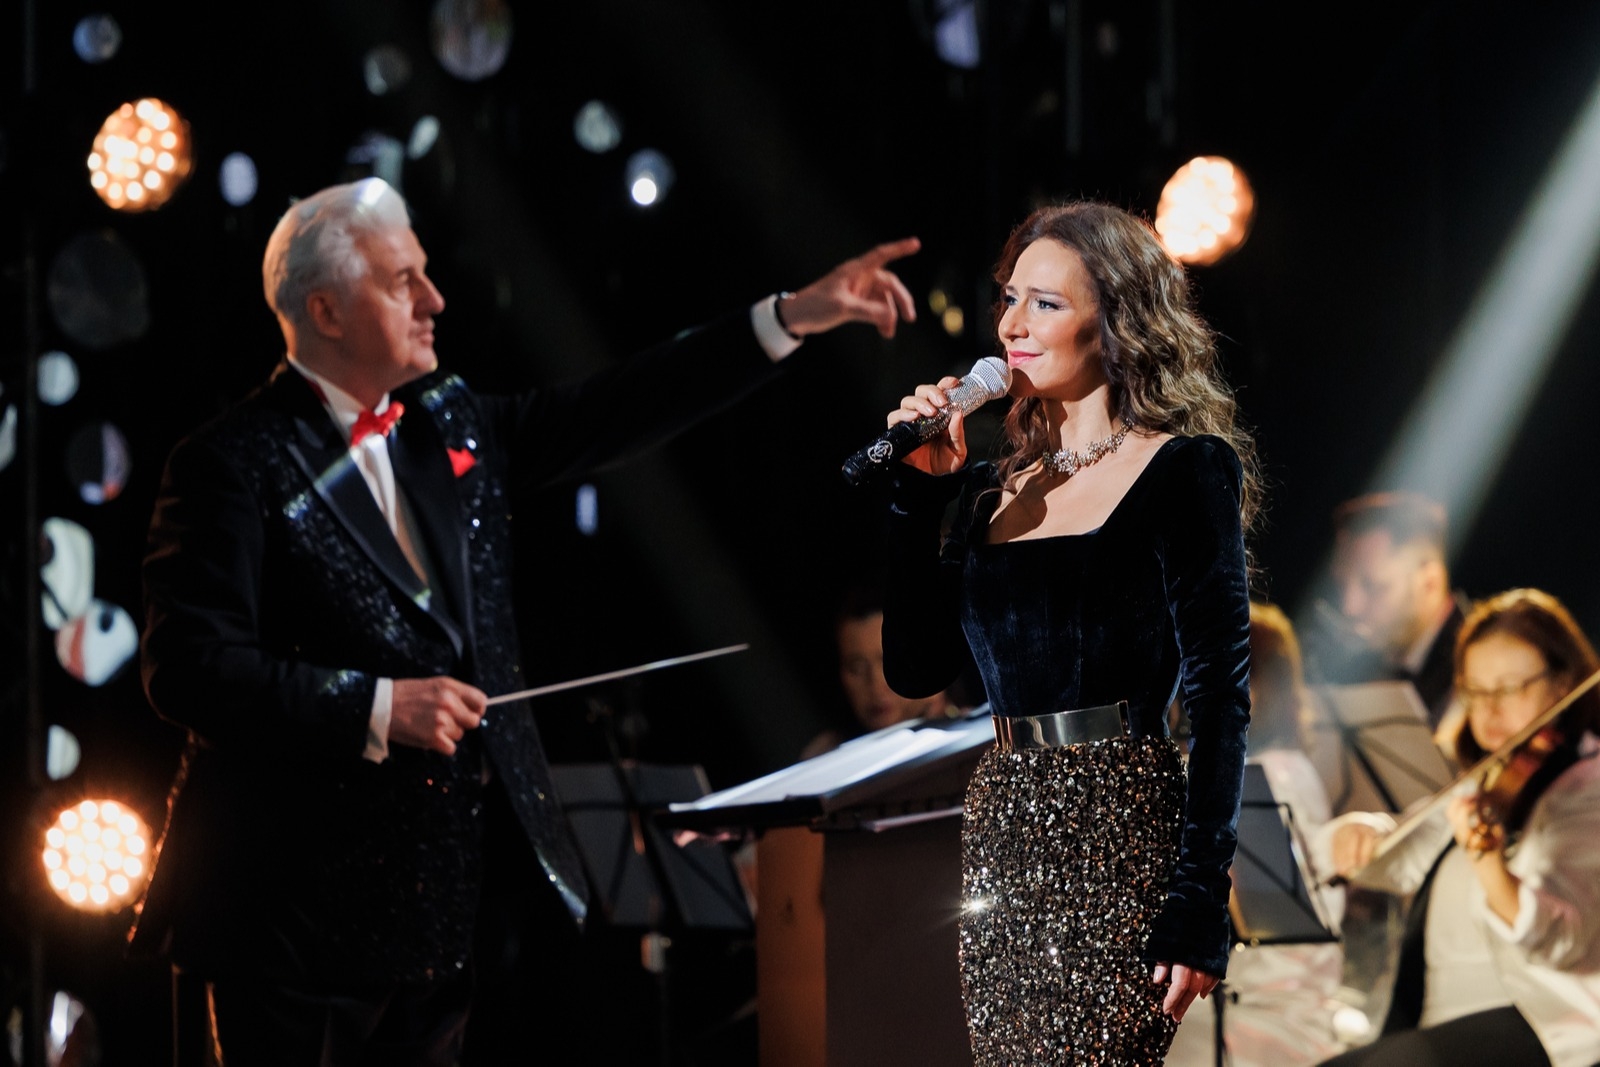 Певица Елена Север отметила 50-летний юбилей в компании звезд